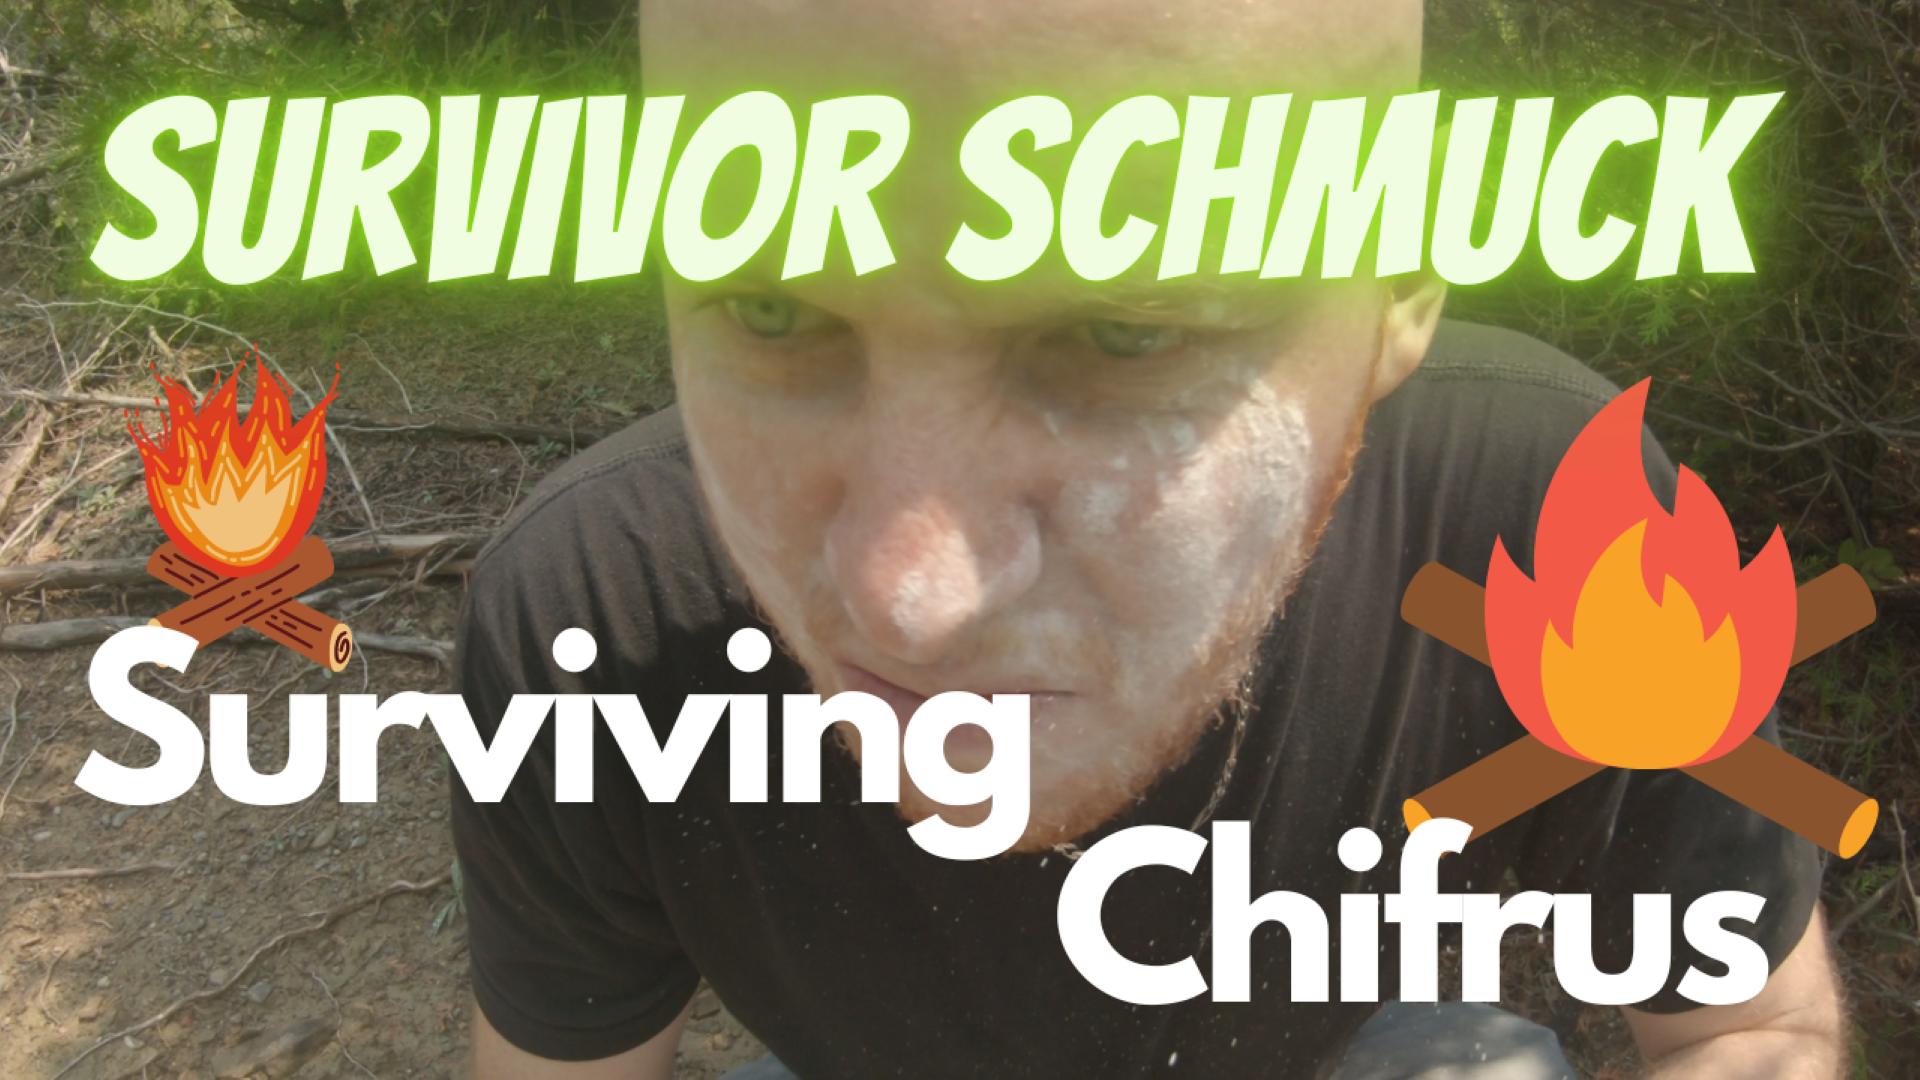 Survivor Schmuck - Surviving Chifrus